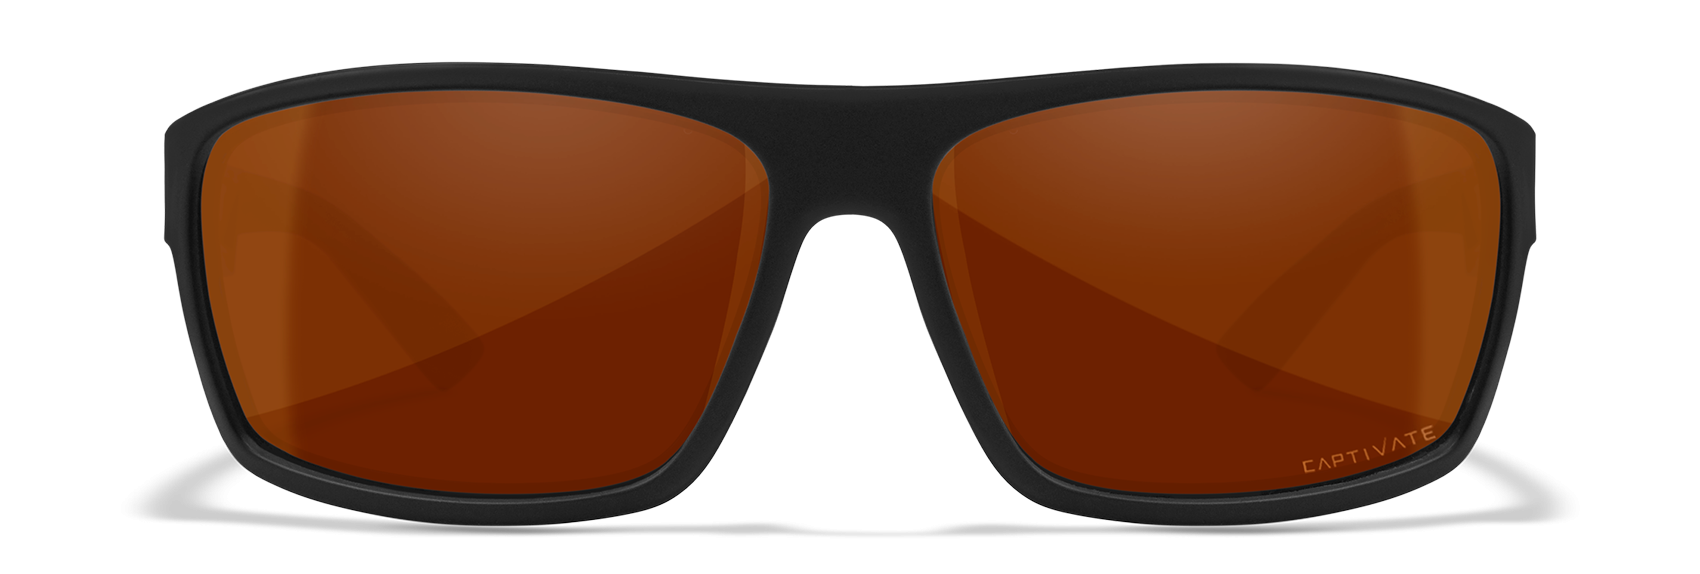 Wiley X WX Peak Copper Polycarbonate Sunglasses